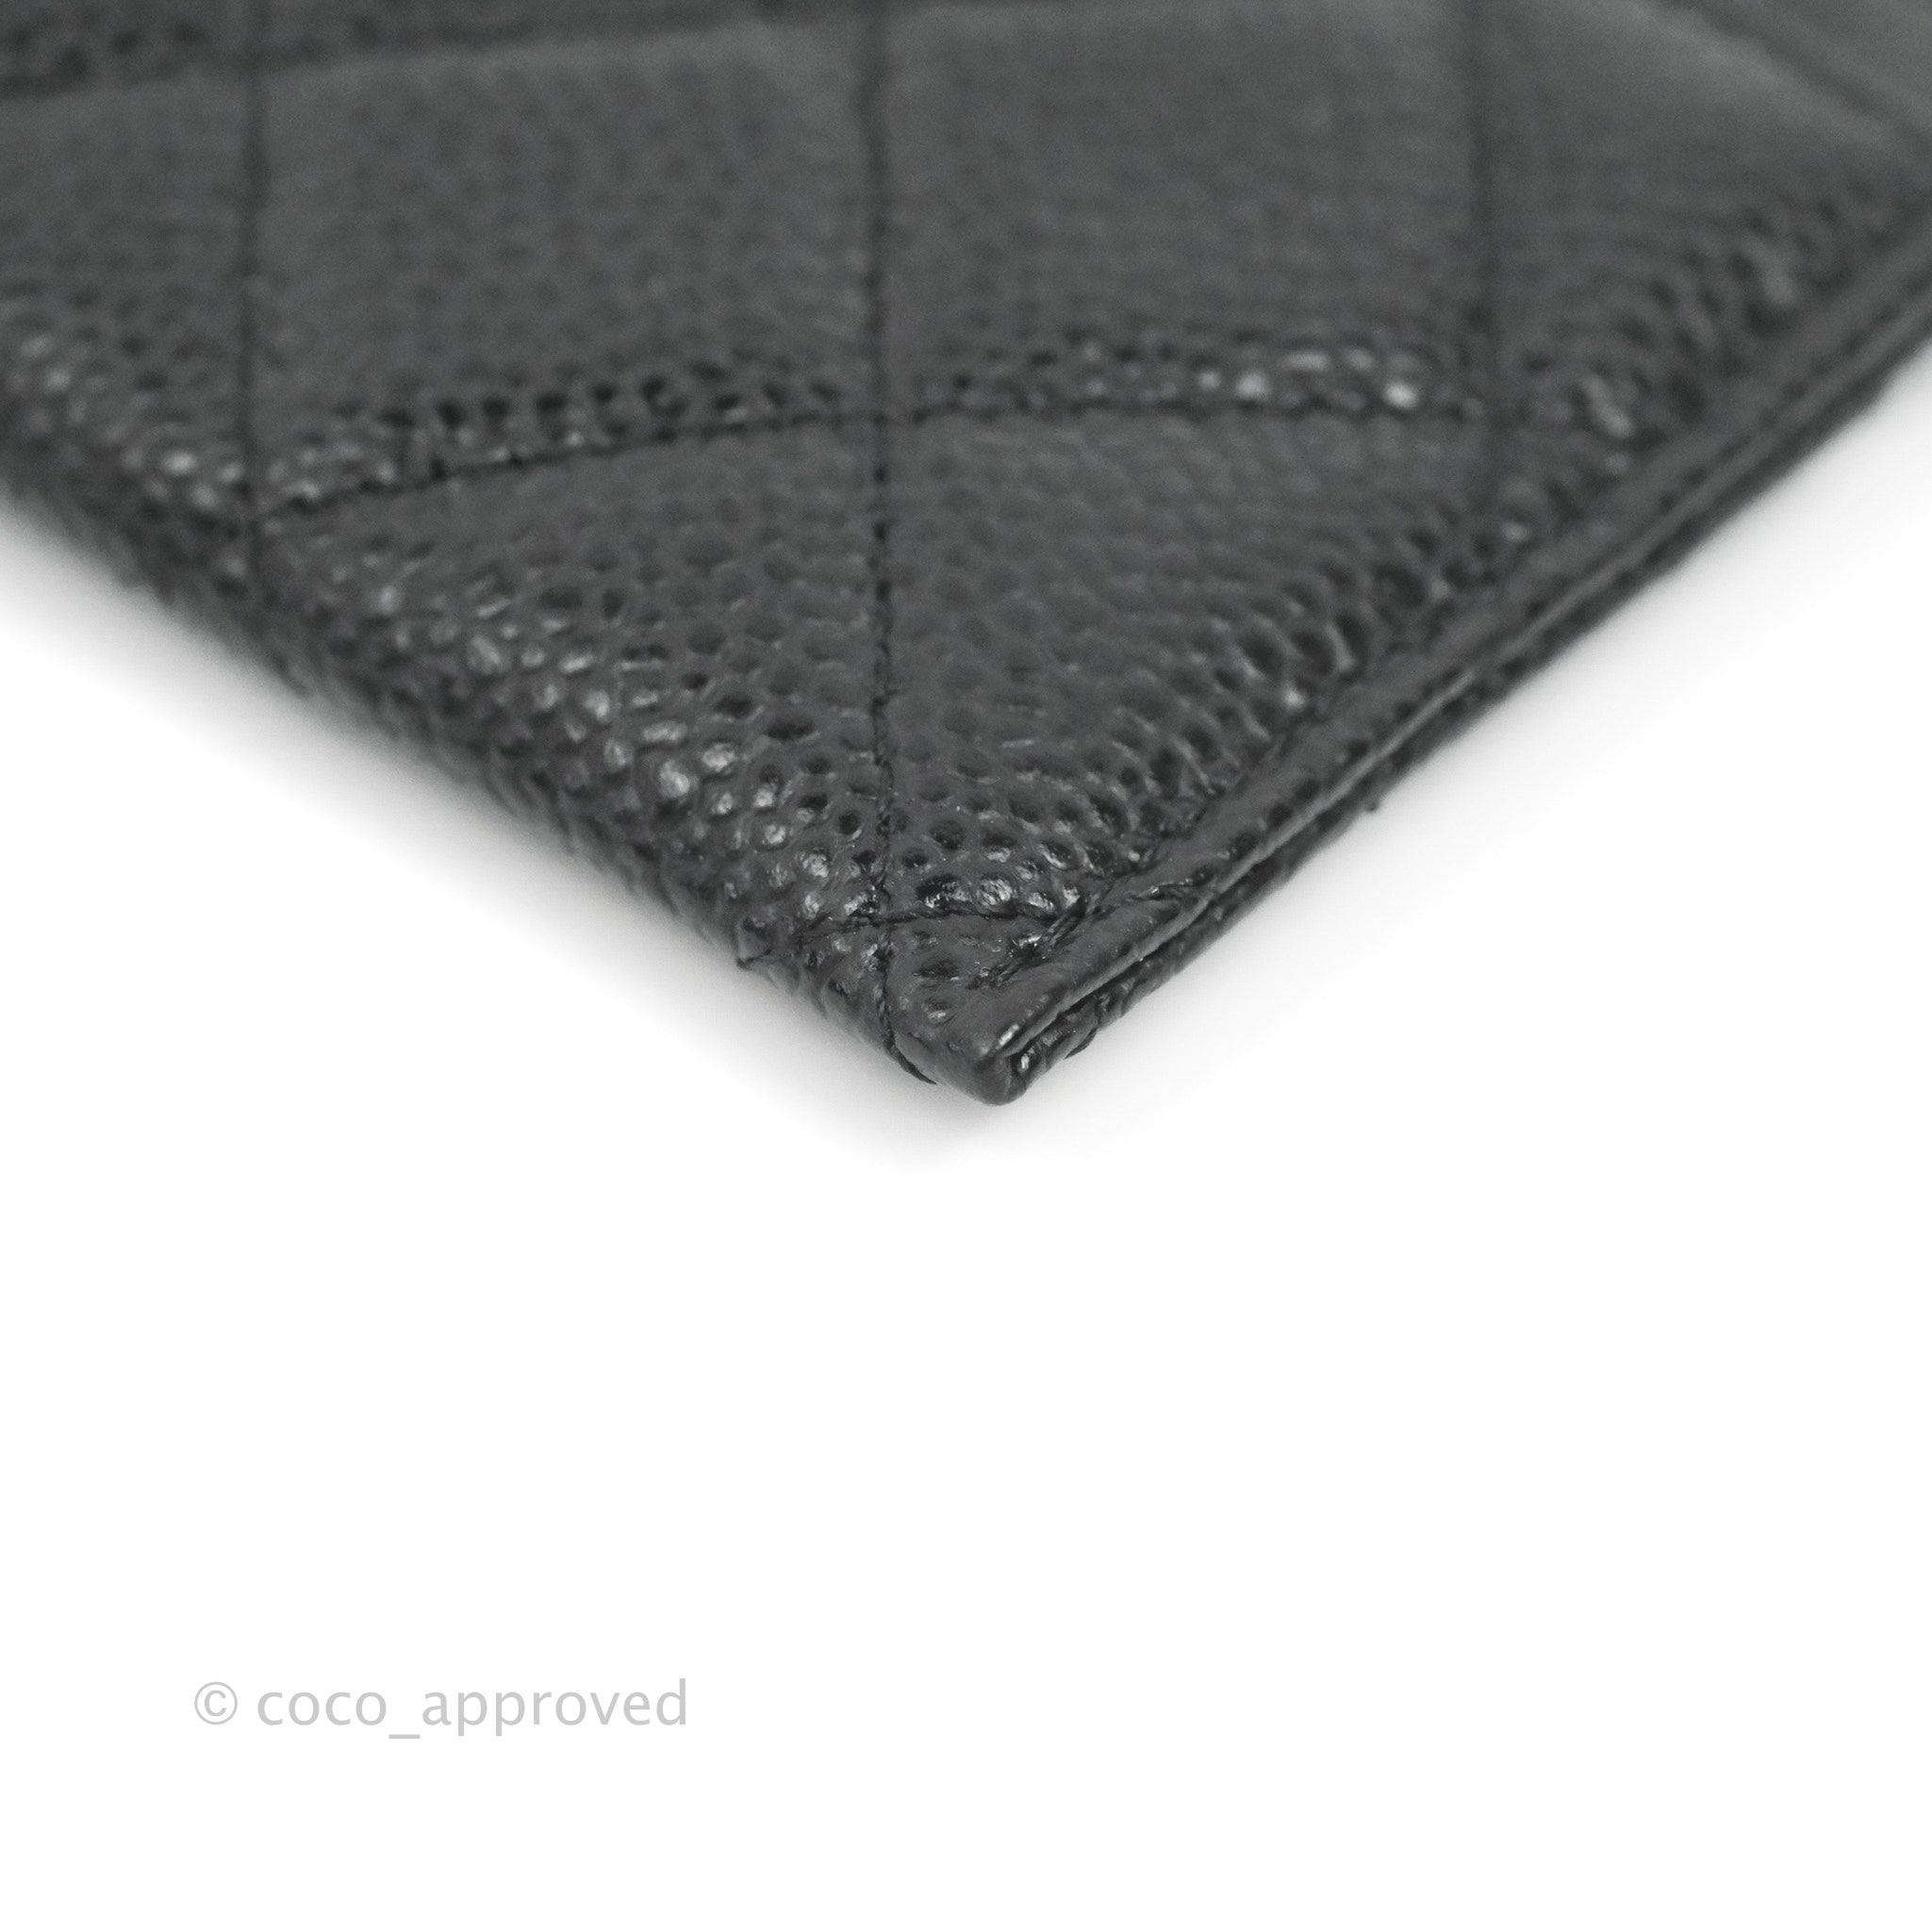 Chanel Black Caviar Card Holder ASC2109